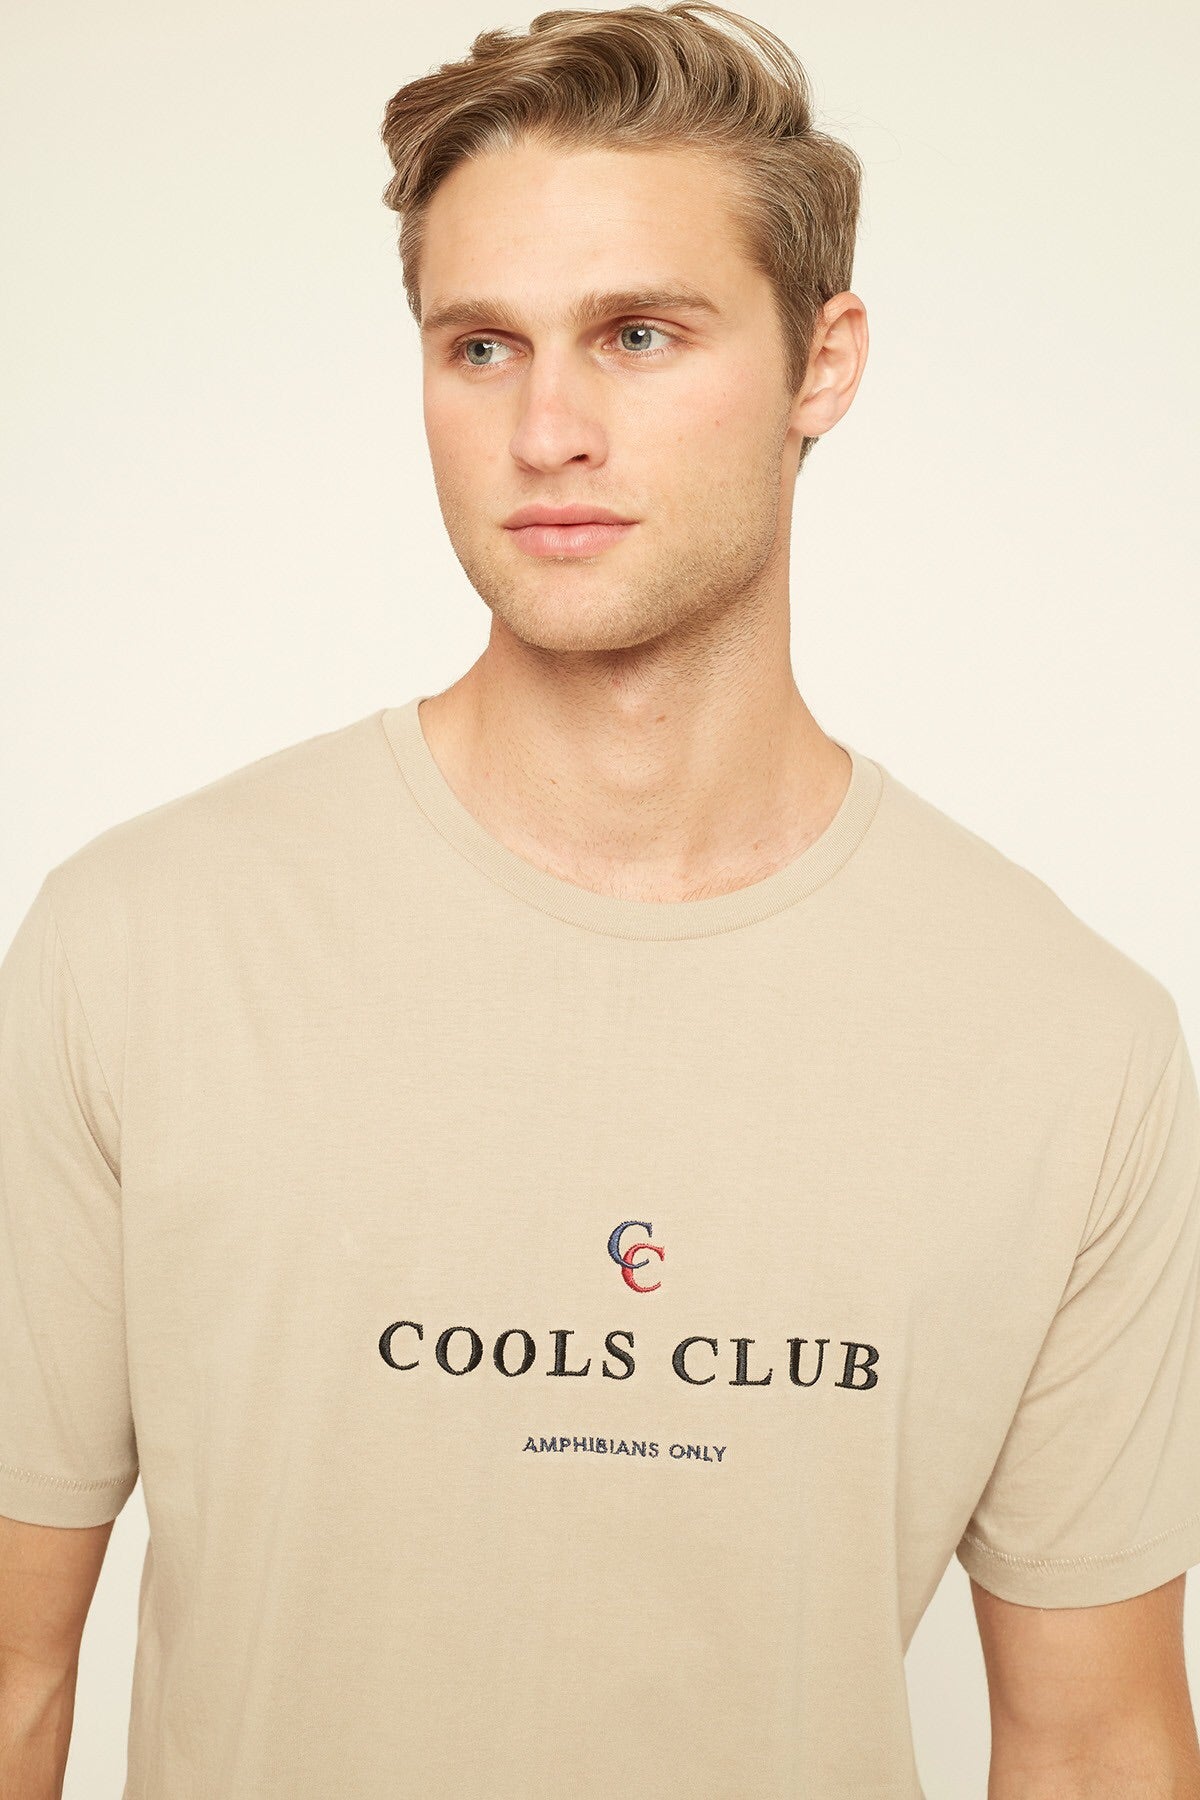 barney cools cools club shirt - 8586